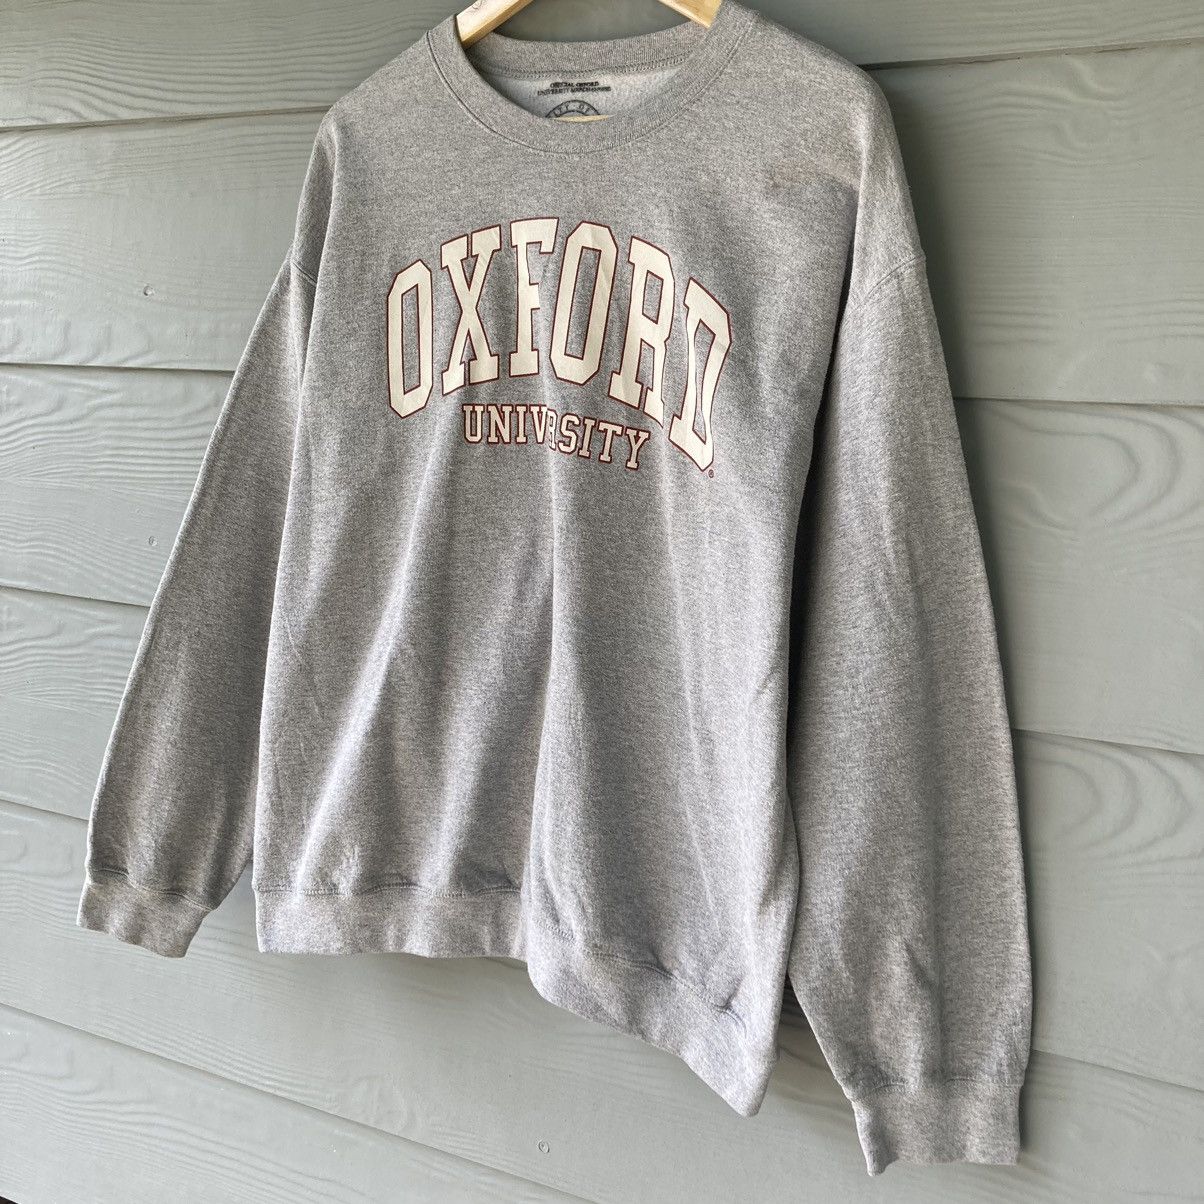 Vintage Official Oxford University Merchandise Sweatshirt - 3